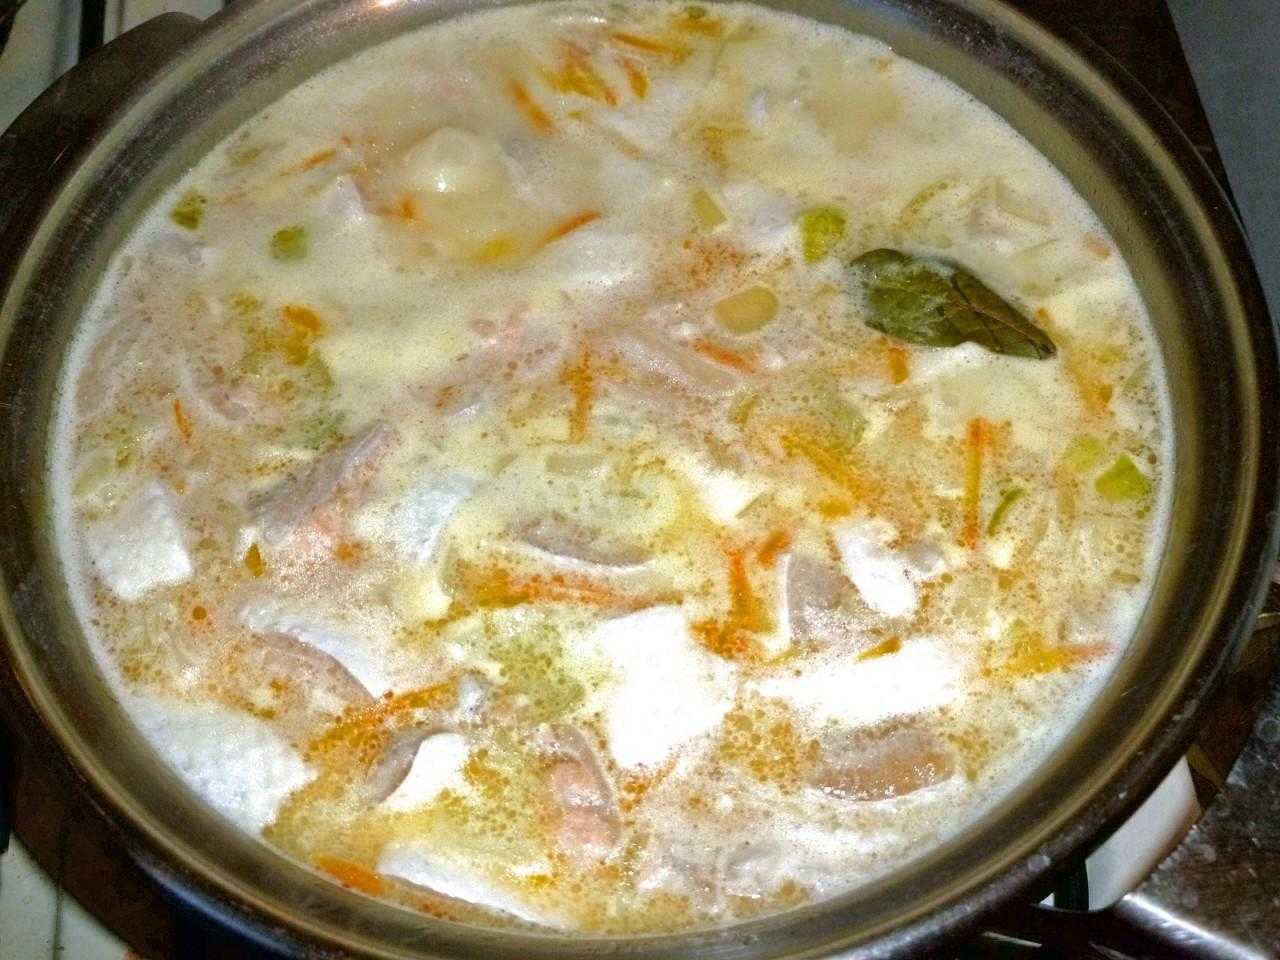 Рецепт суп с семгой с сливками рецепт